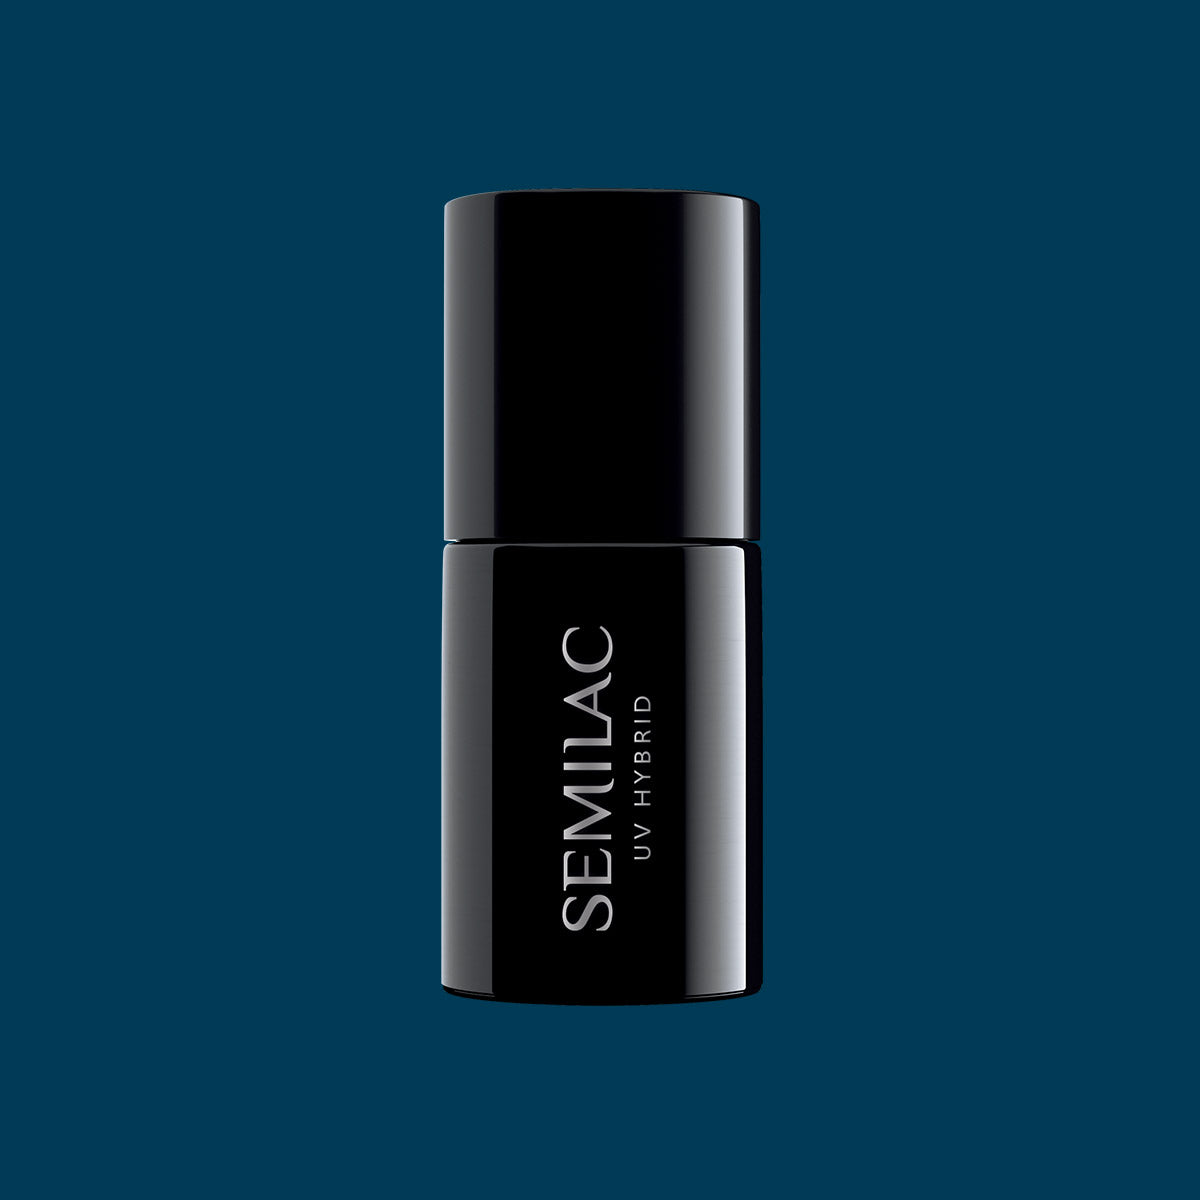 Semilac Tastes of Fall Collection - Semilac UK